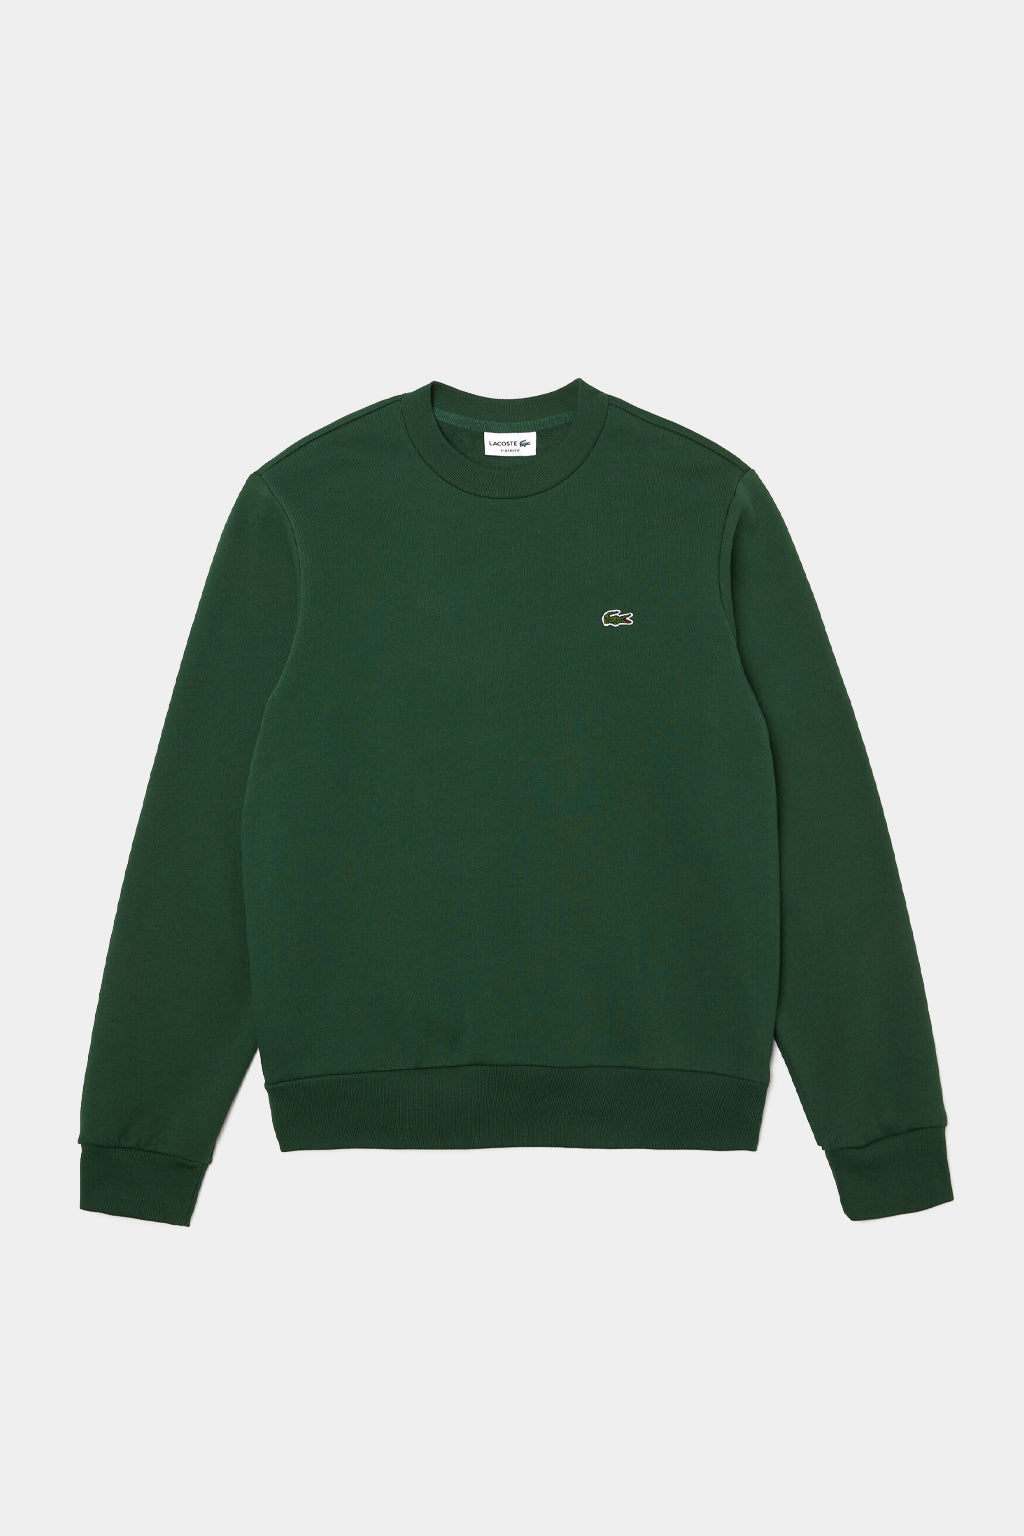 Lacoste-Organic Brushed Cotton Sweatshirt